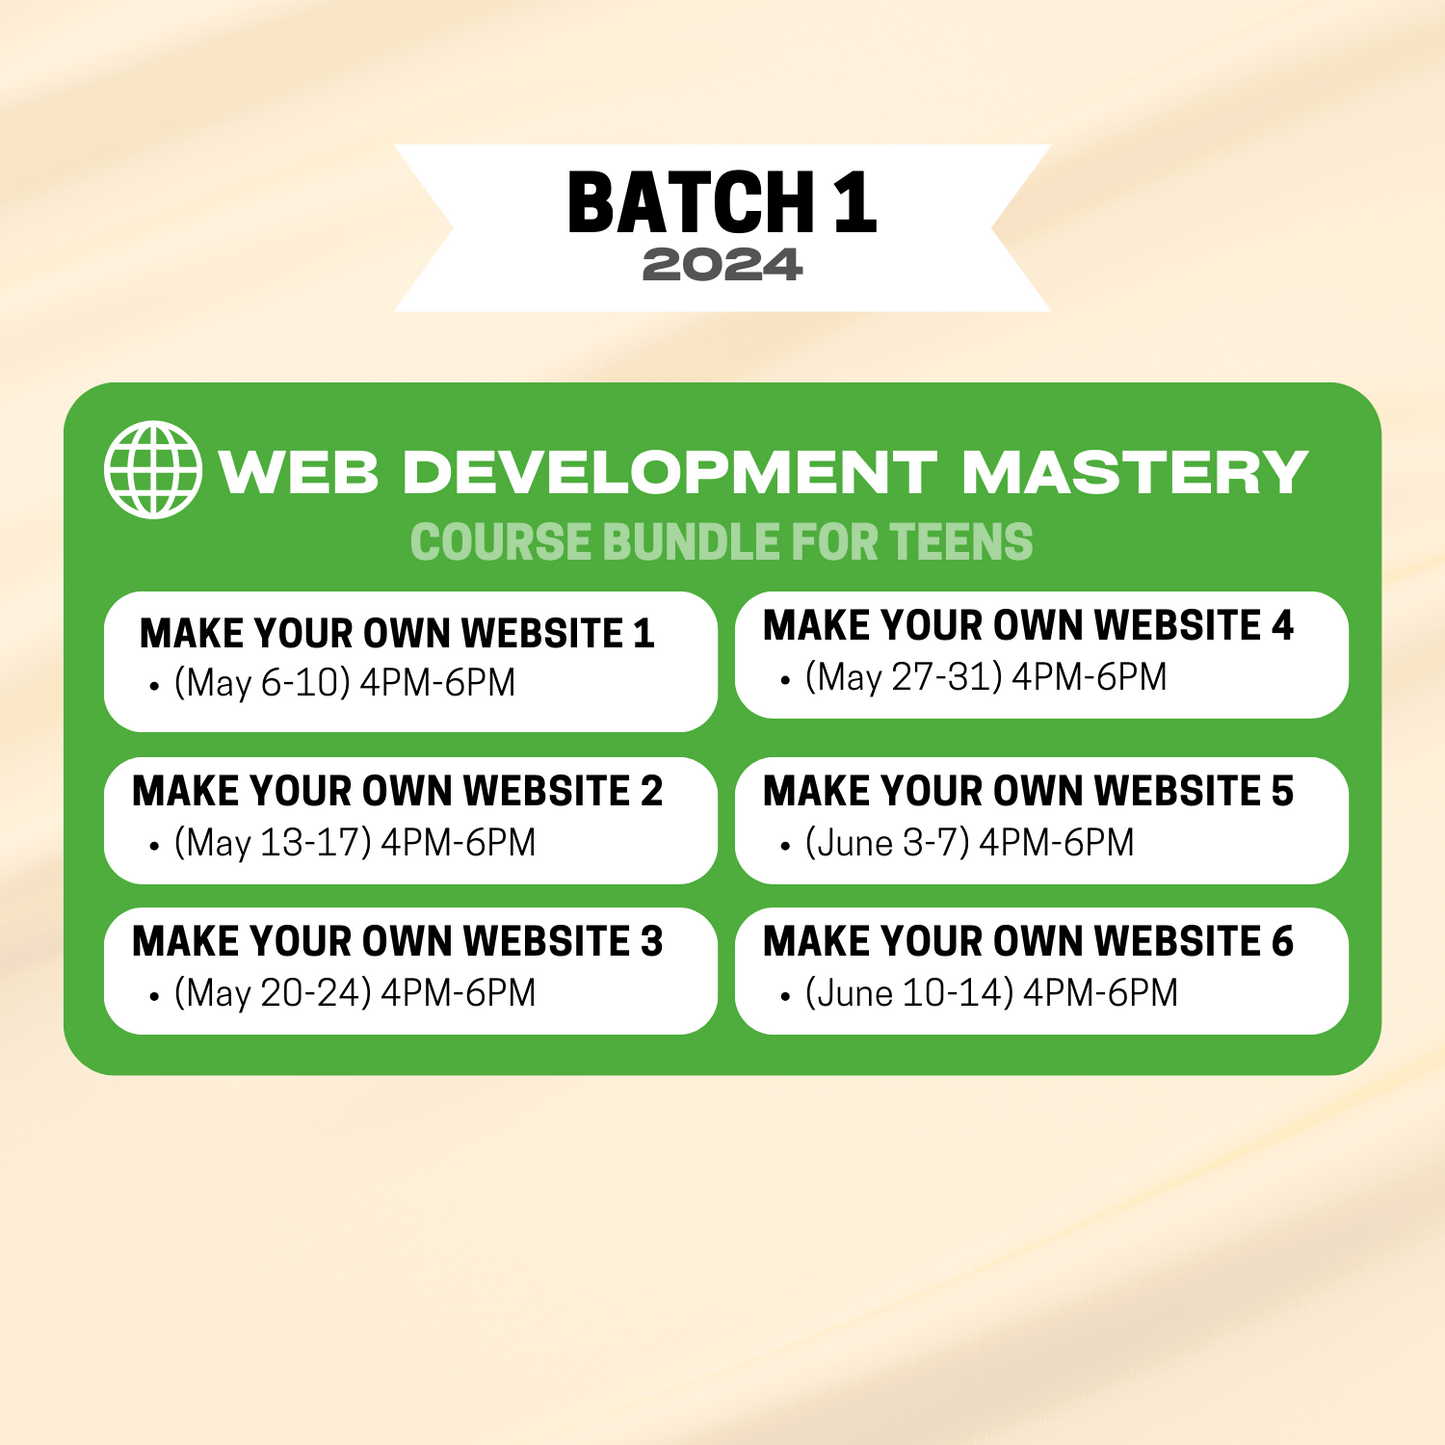 Web Development Mastery for Teens